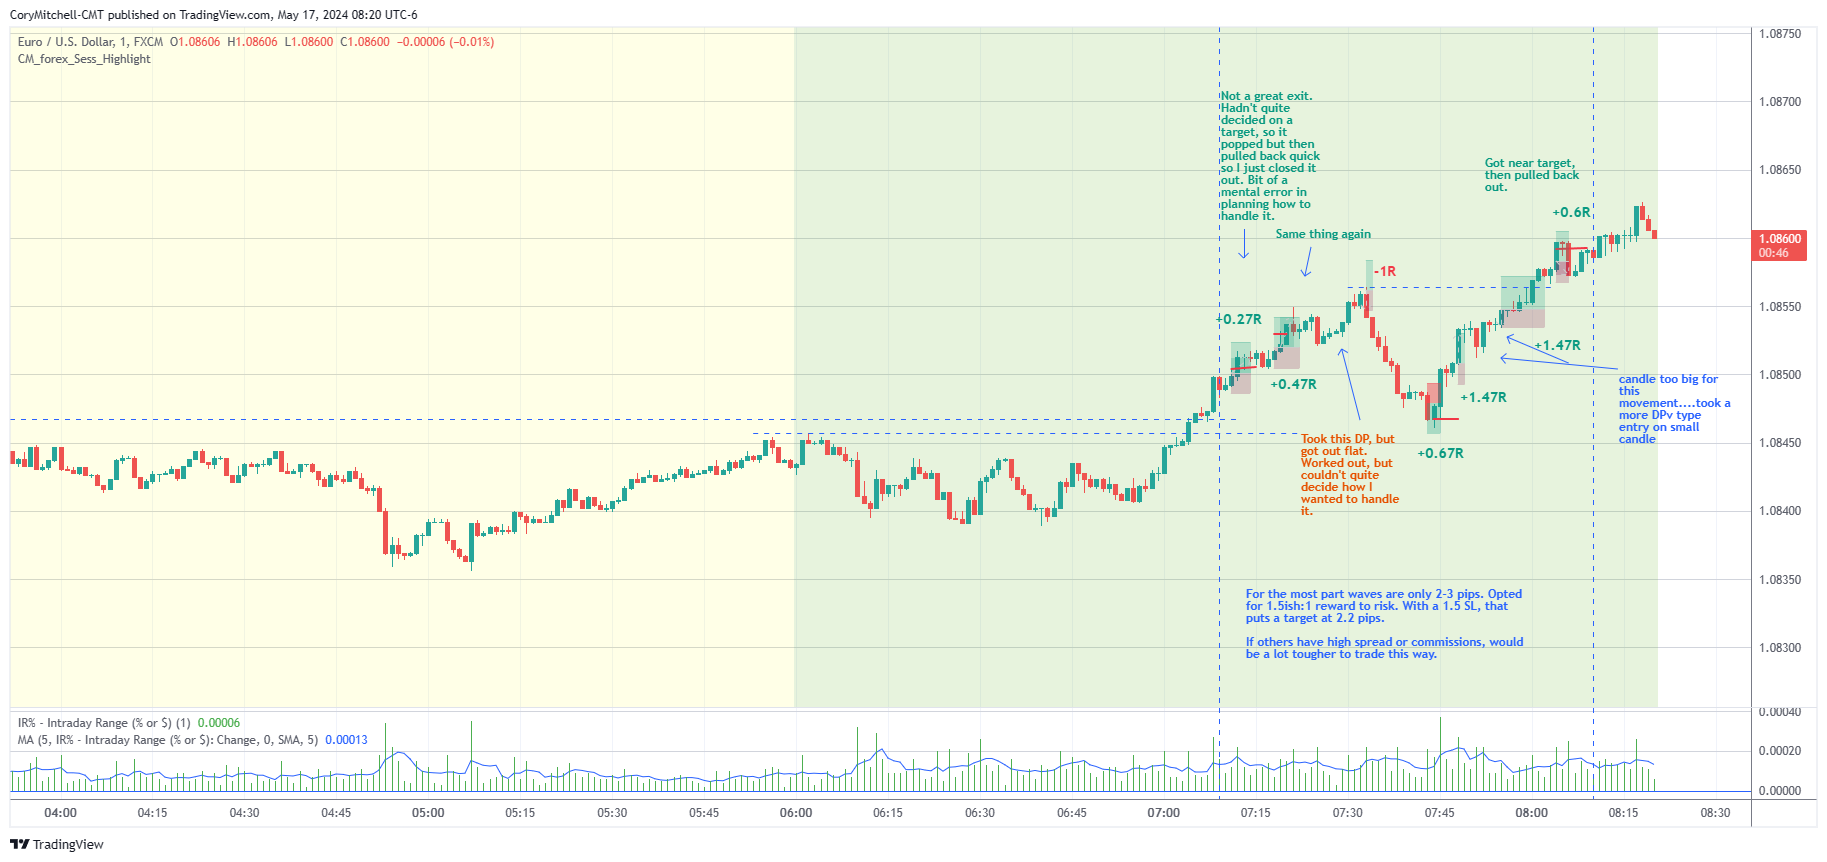 EURUSD 1 minute chart day trading examples May 17 2024